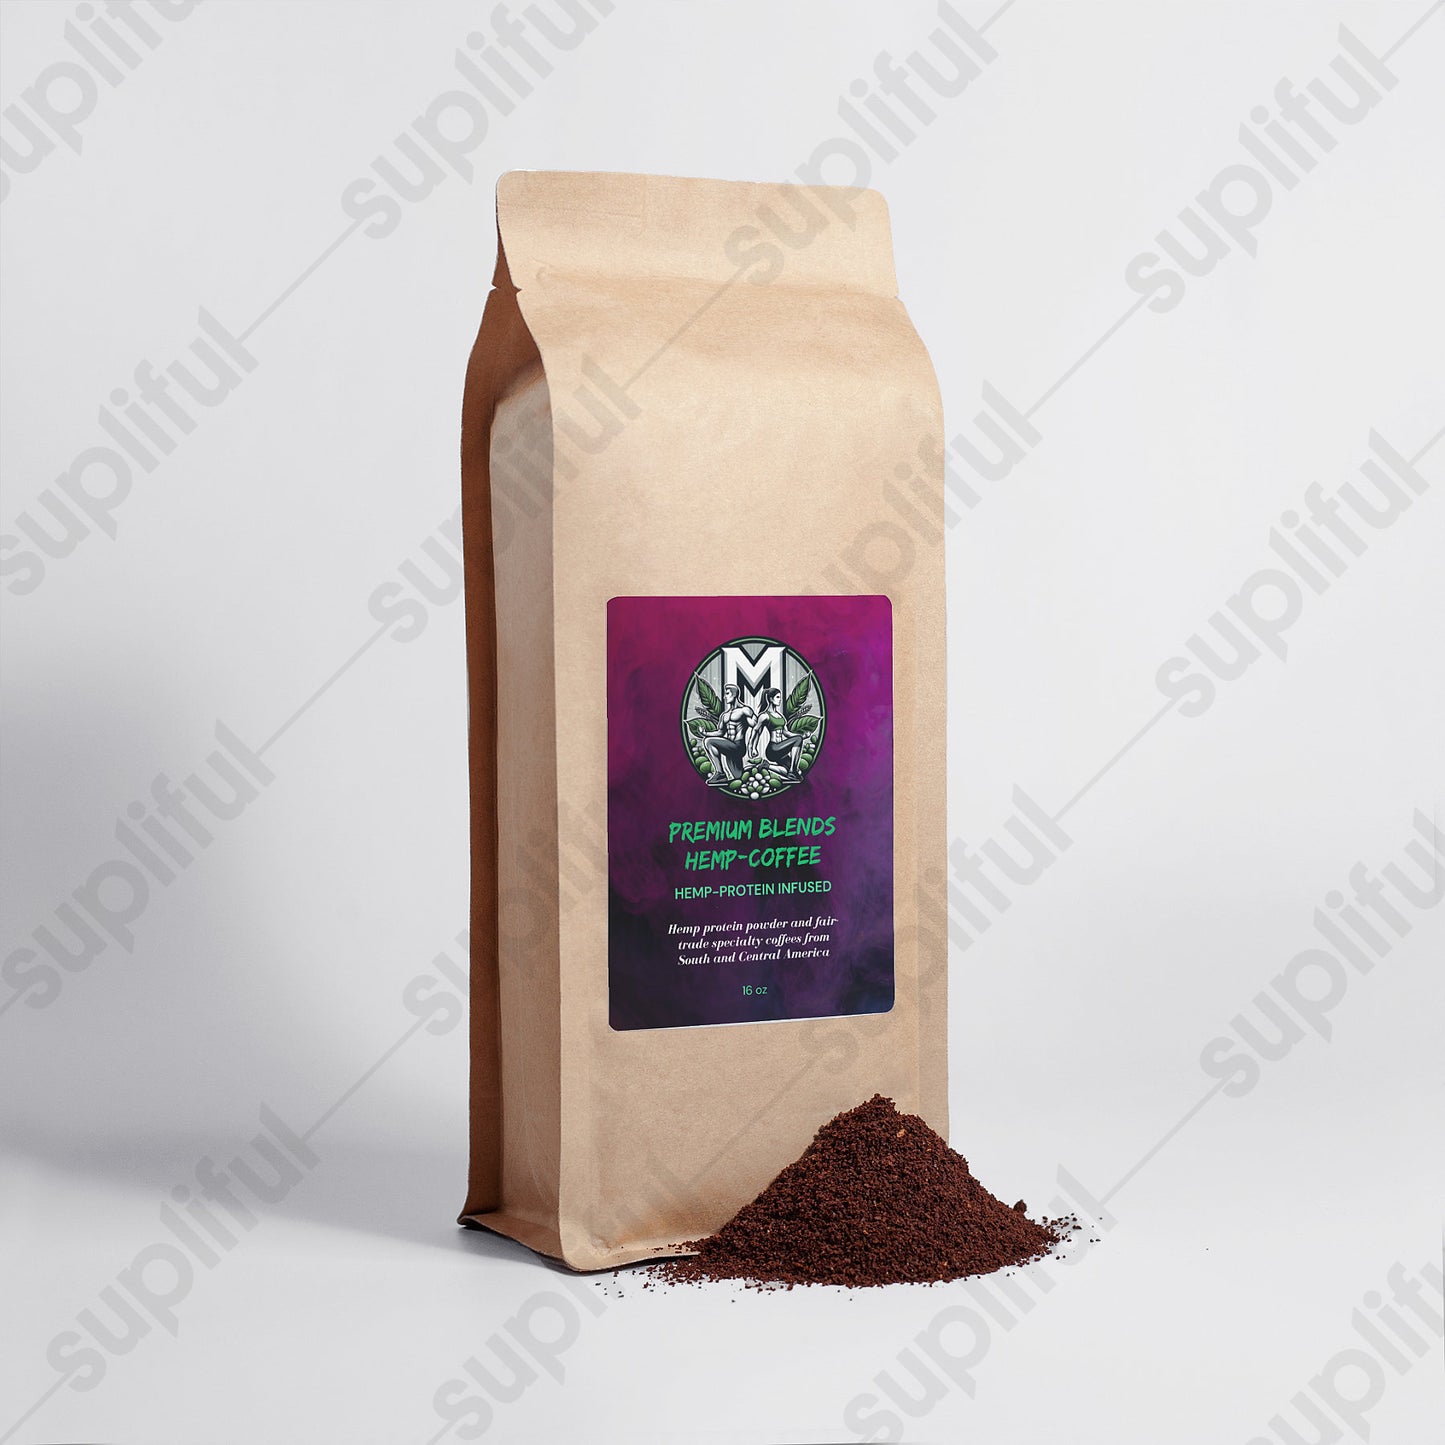 Vibrant Visions - Organic Health & Wellness - Premium Blends, Hemp-Protein Infused Coffee, 16oz.